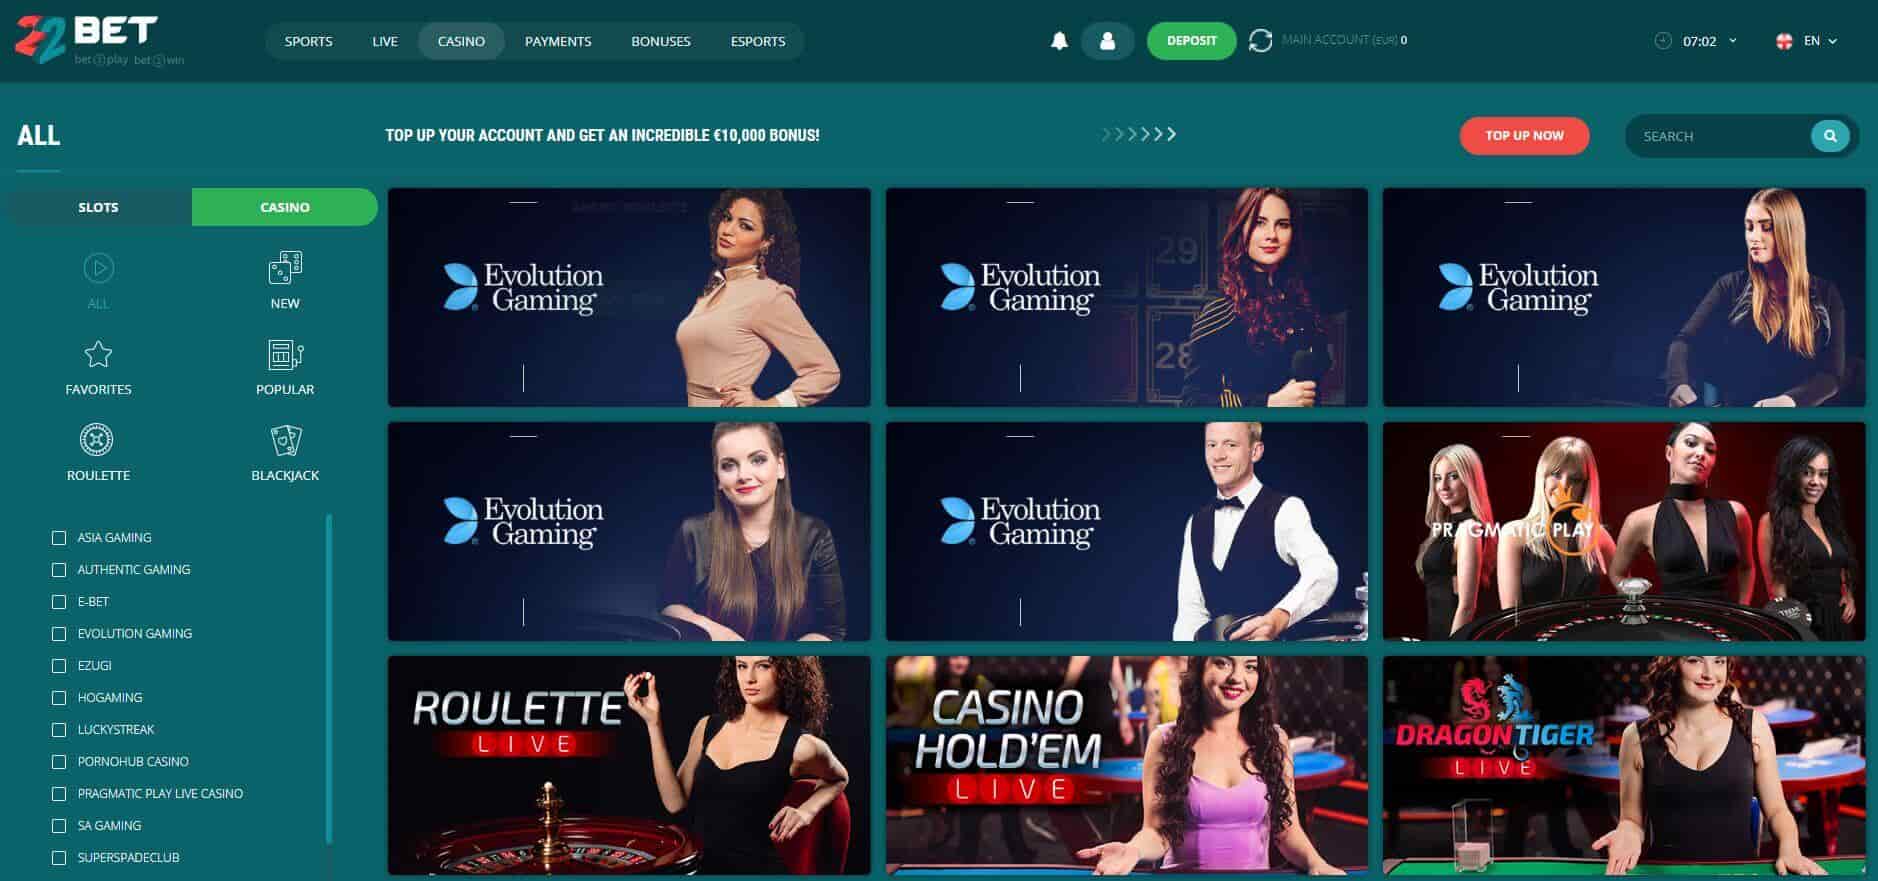 22bet live dealer casino